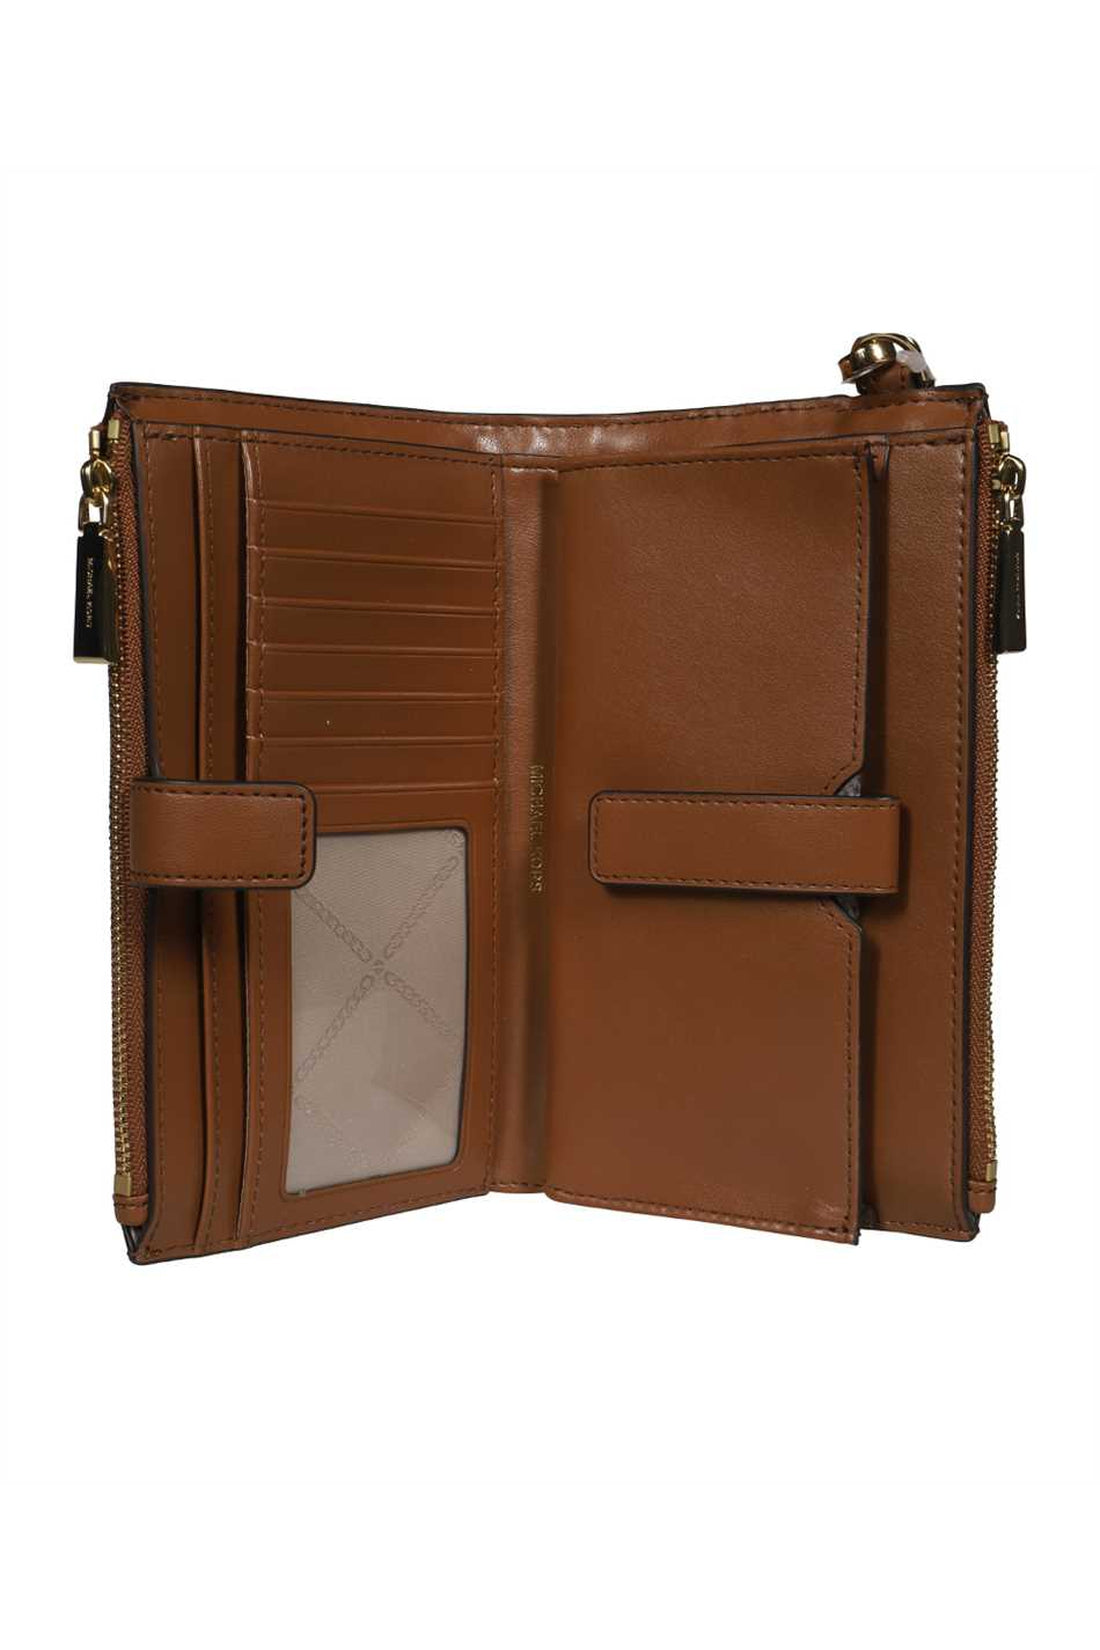 MICHAEL MICHAEL KORS-OUTLET-SALE-Small leather flap-over wallet-ARCHIVIST